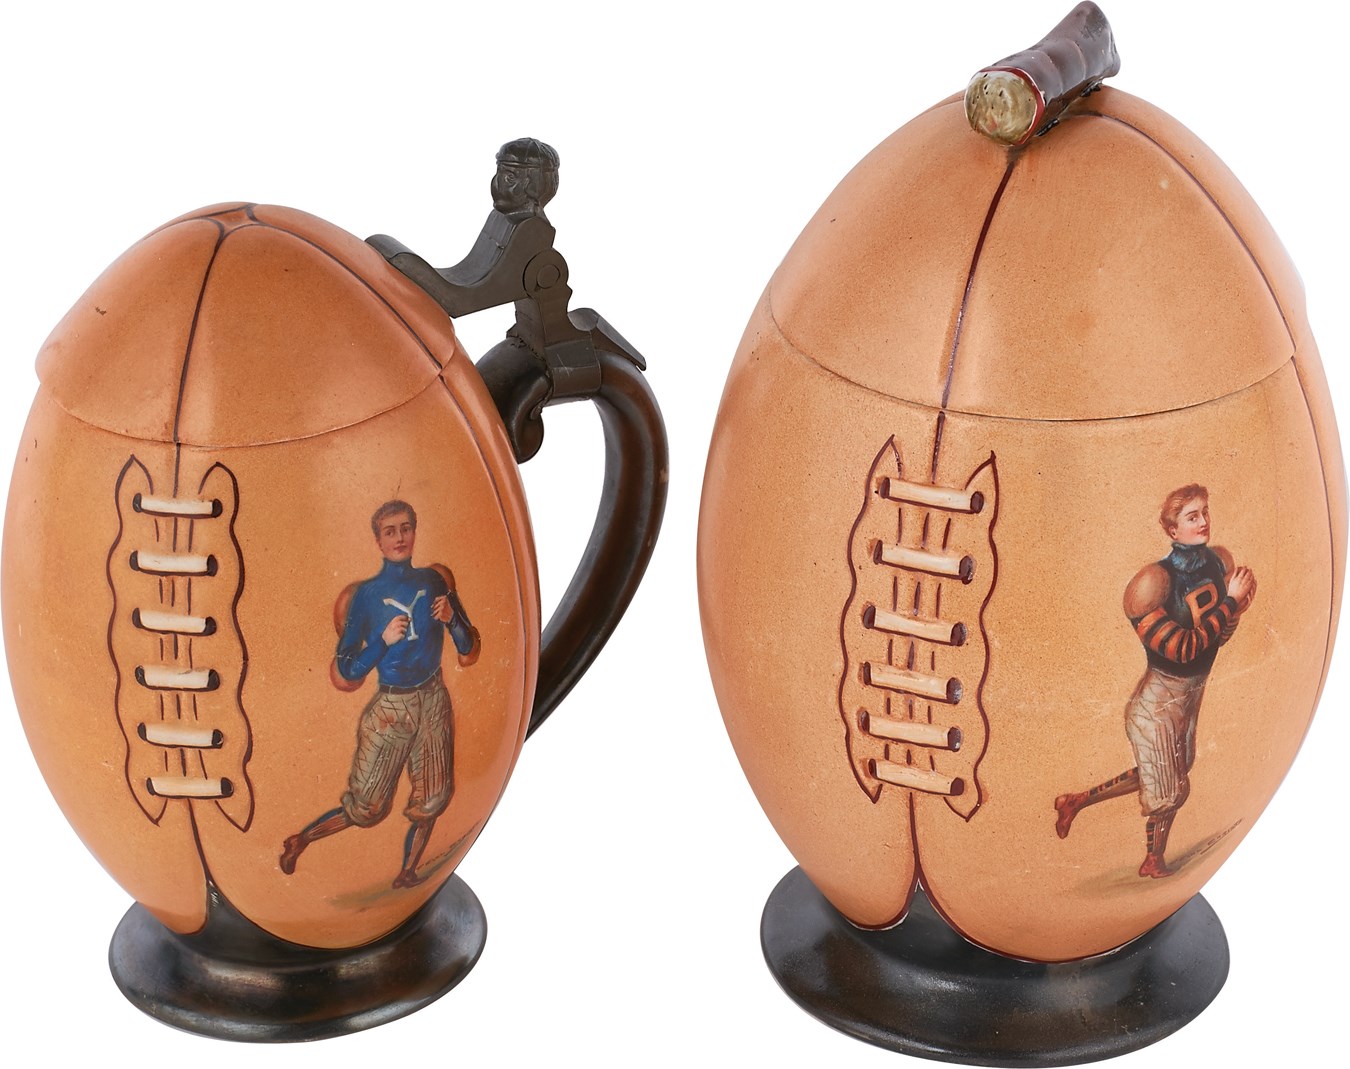 Extremely Rare Early 1900s Figural Football Cigar Humidor with Matching Lidded Mug